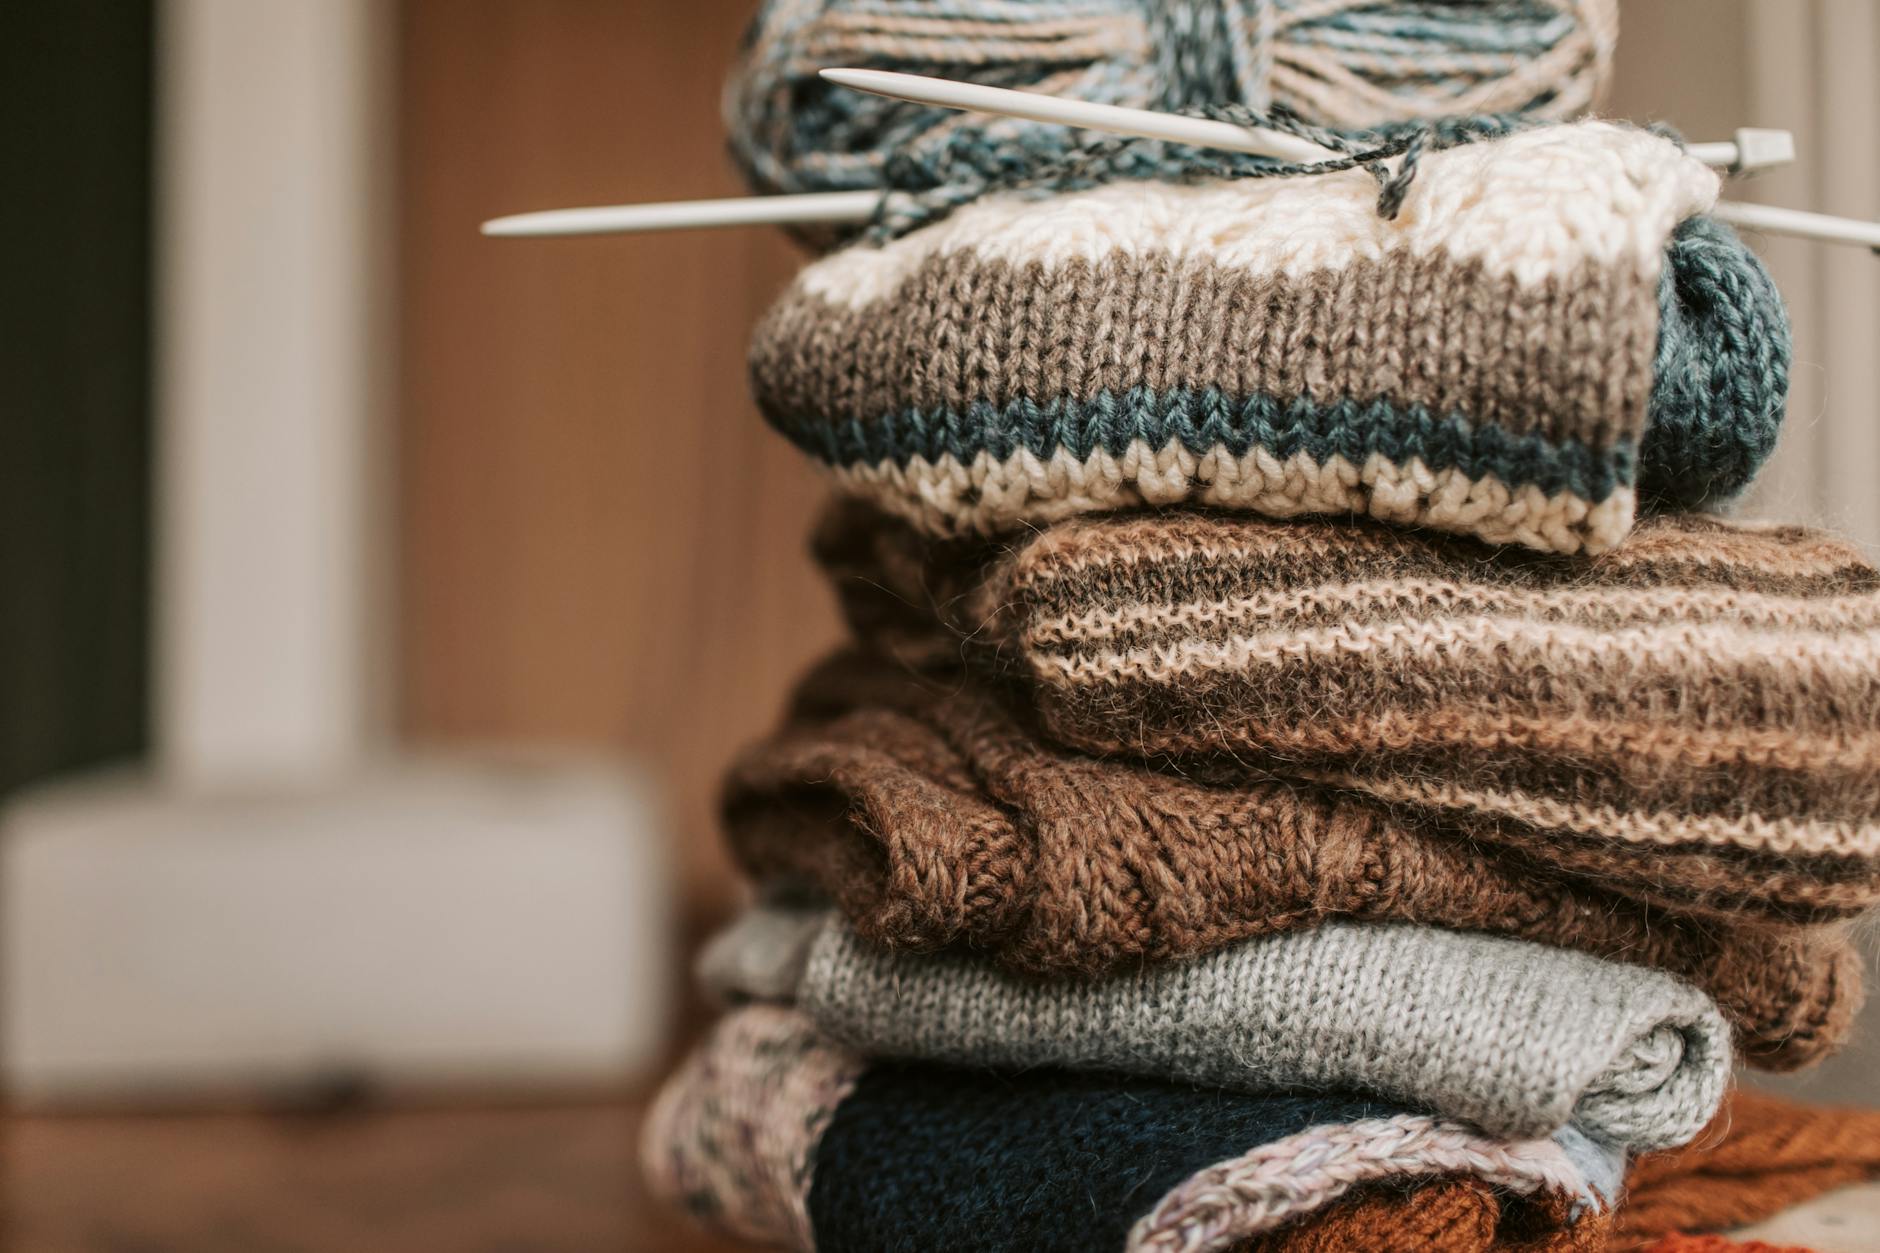 Handmade Scarves and Knitting Needles